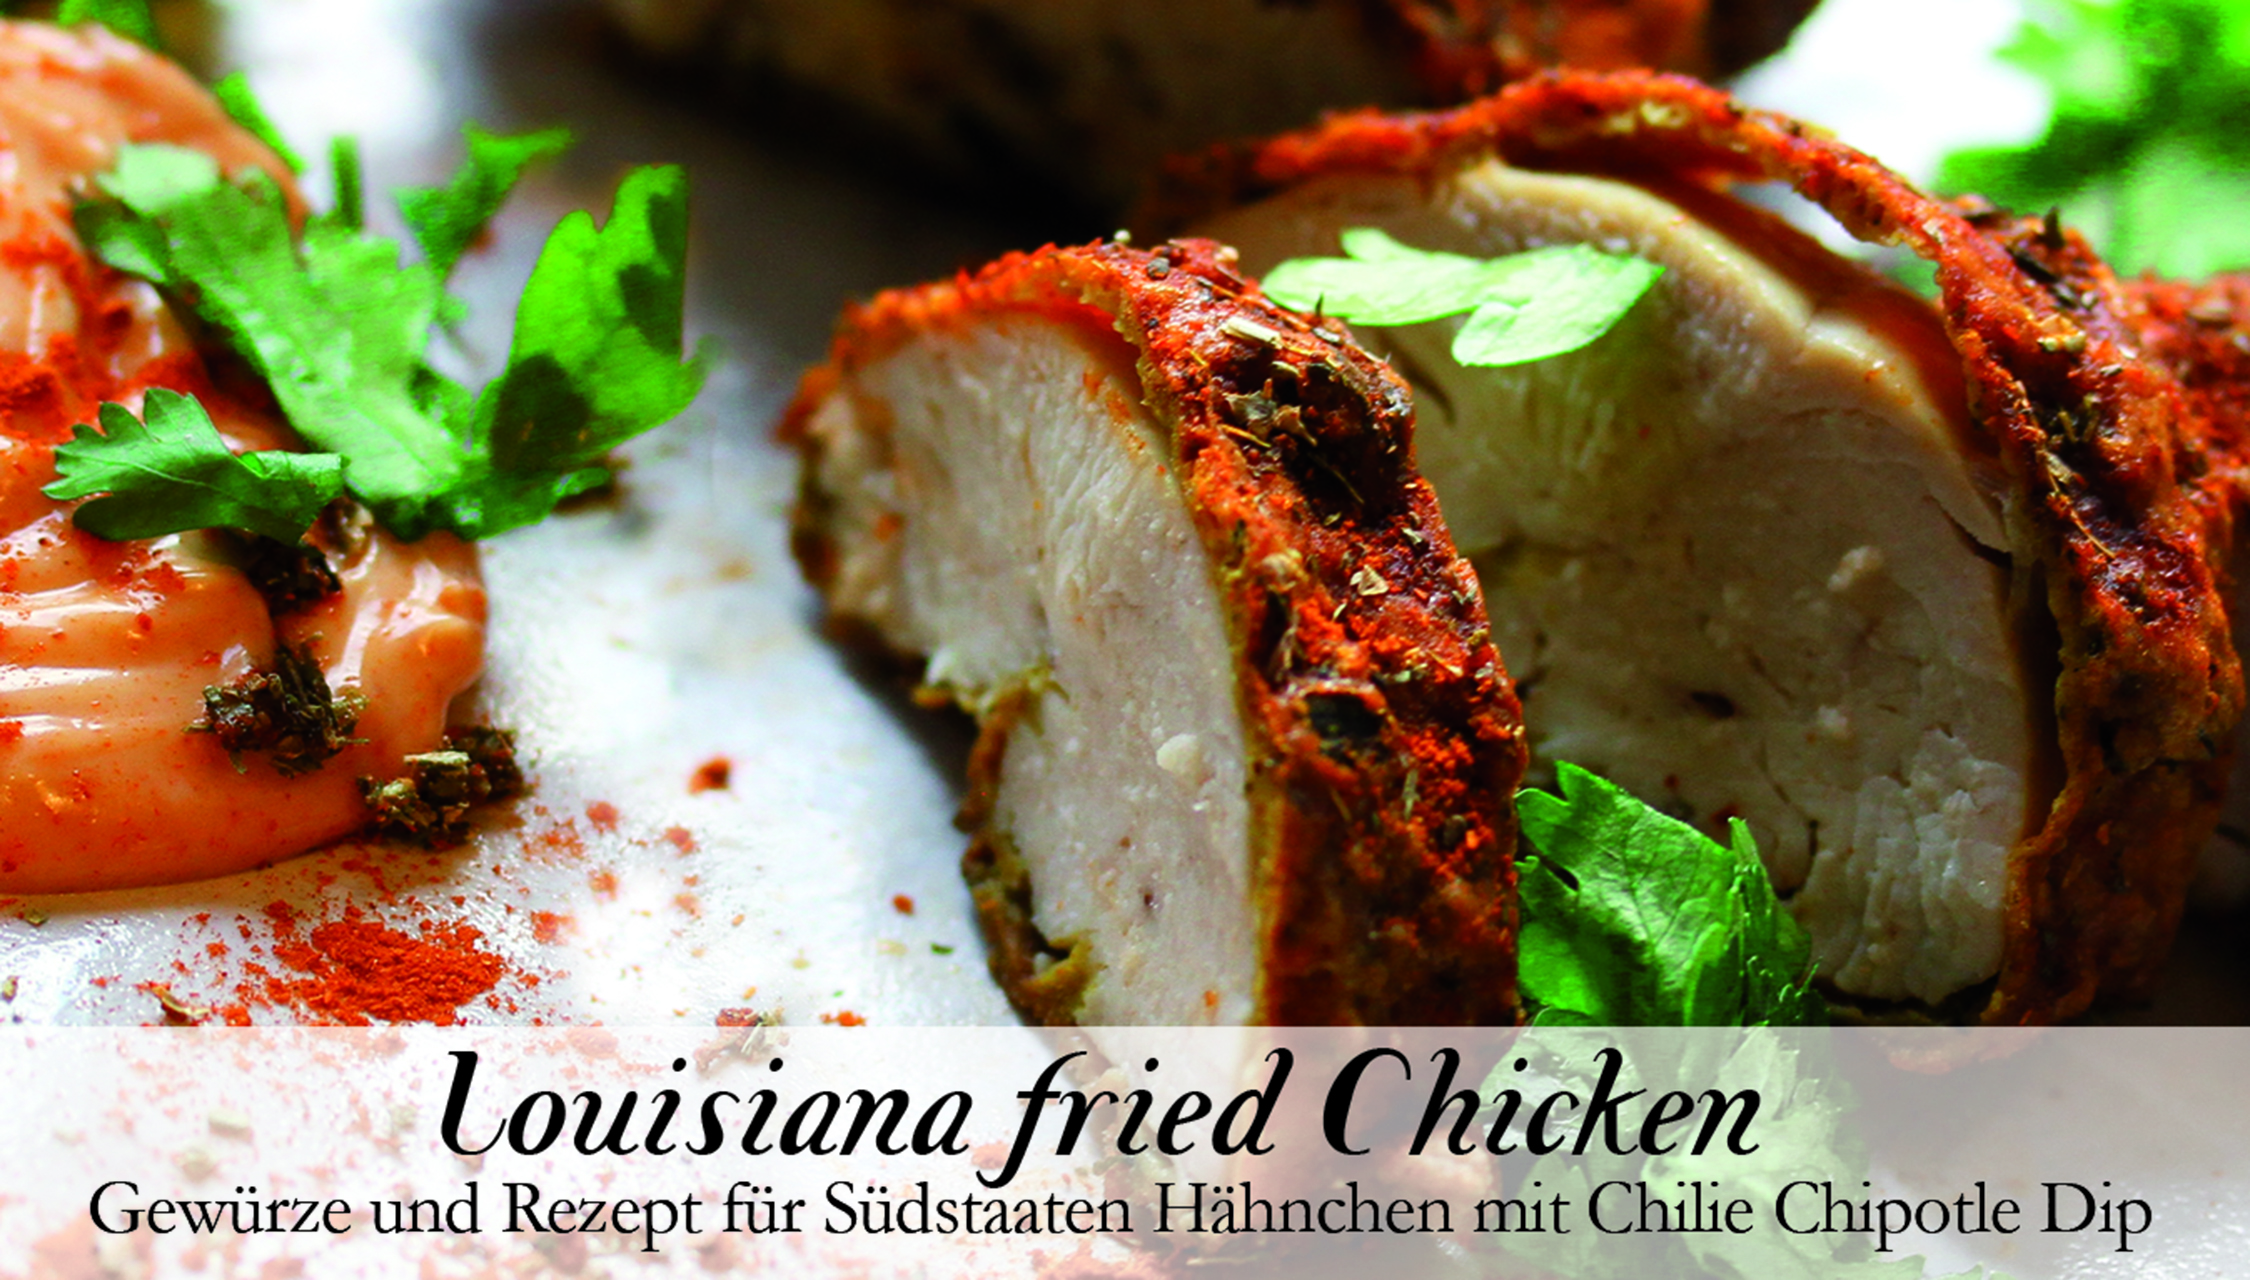 Lousiana fried Chicken-Gewürzkasten